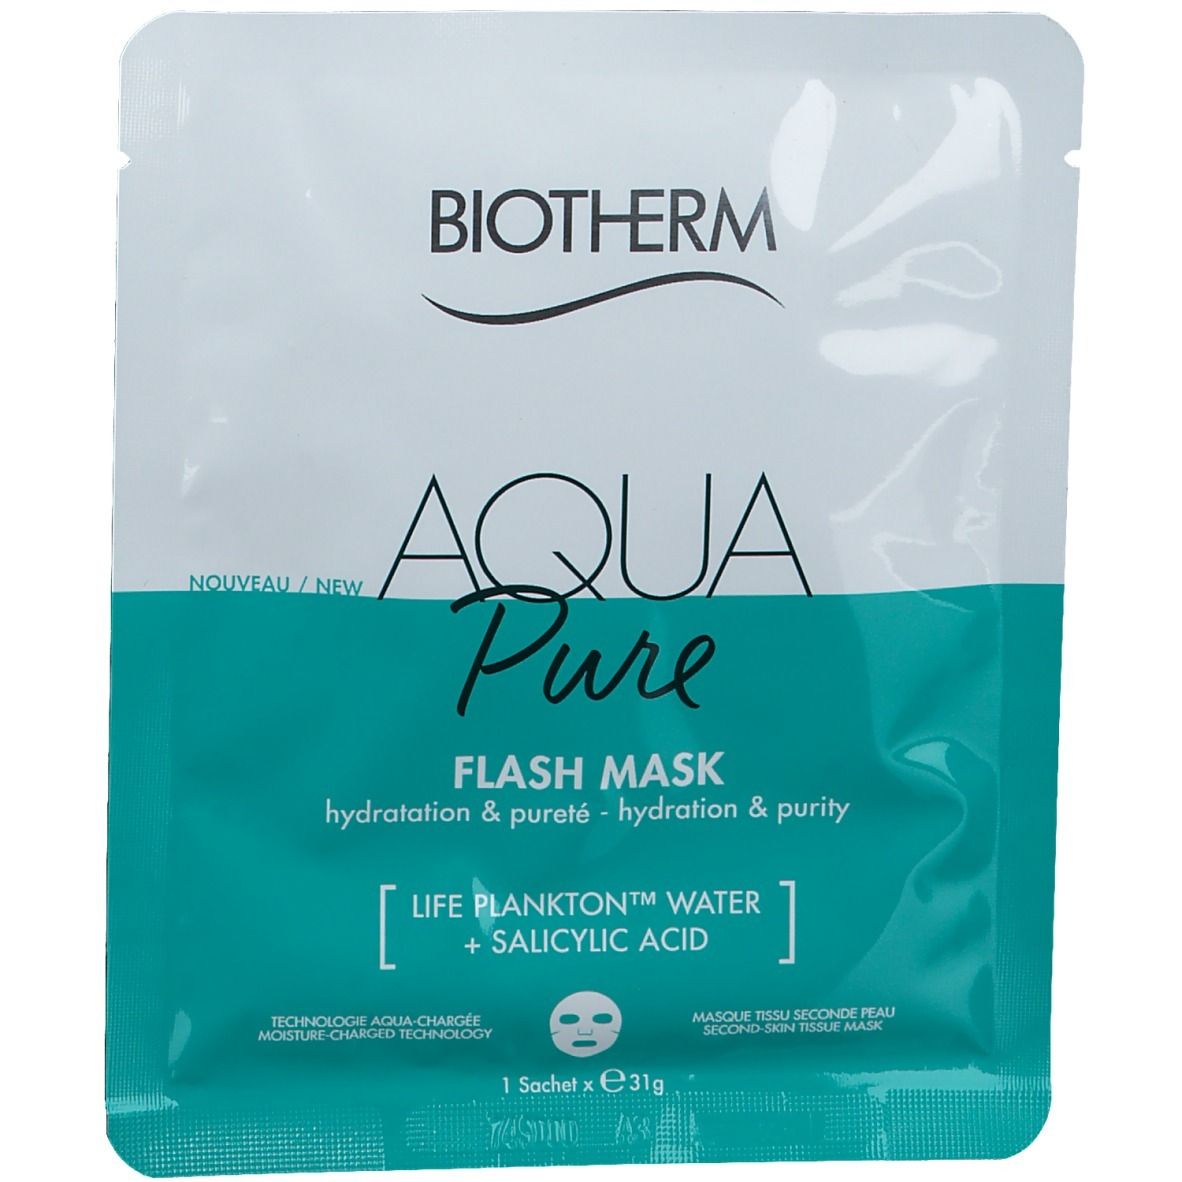 Biotherm Aqua Pure Flash Mask